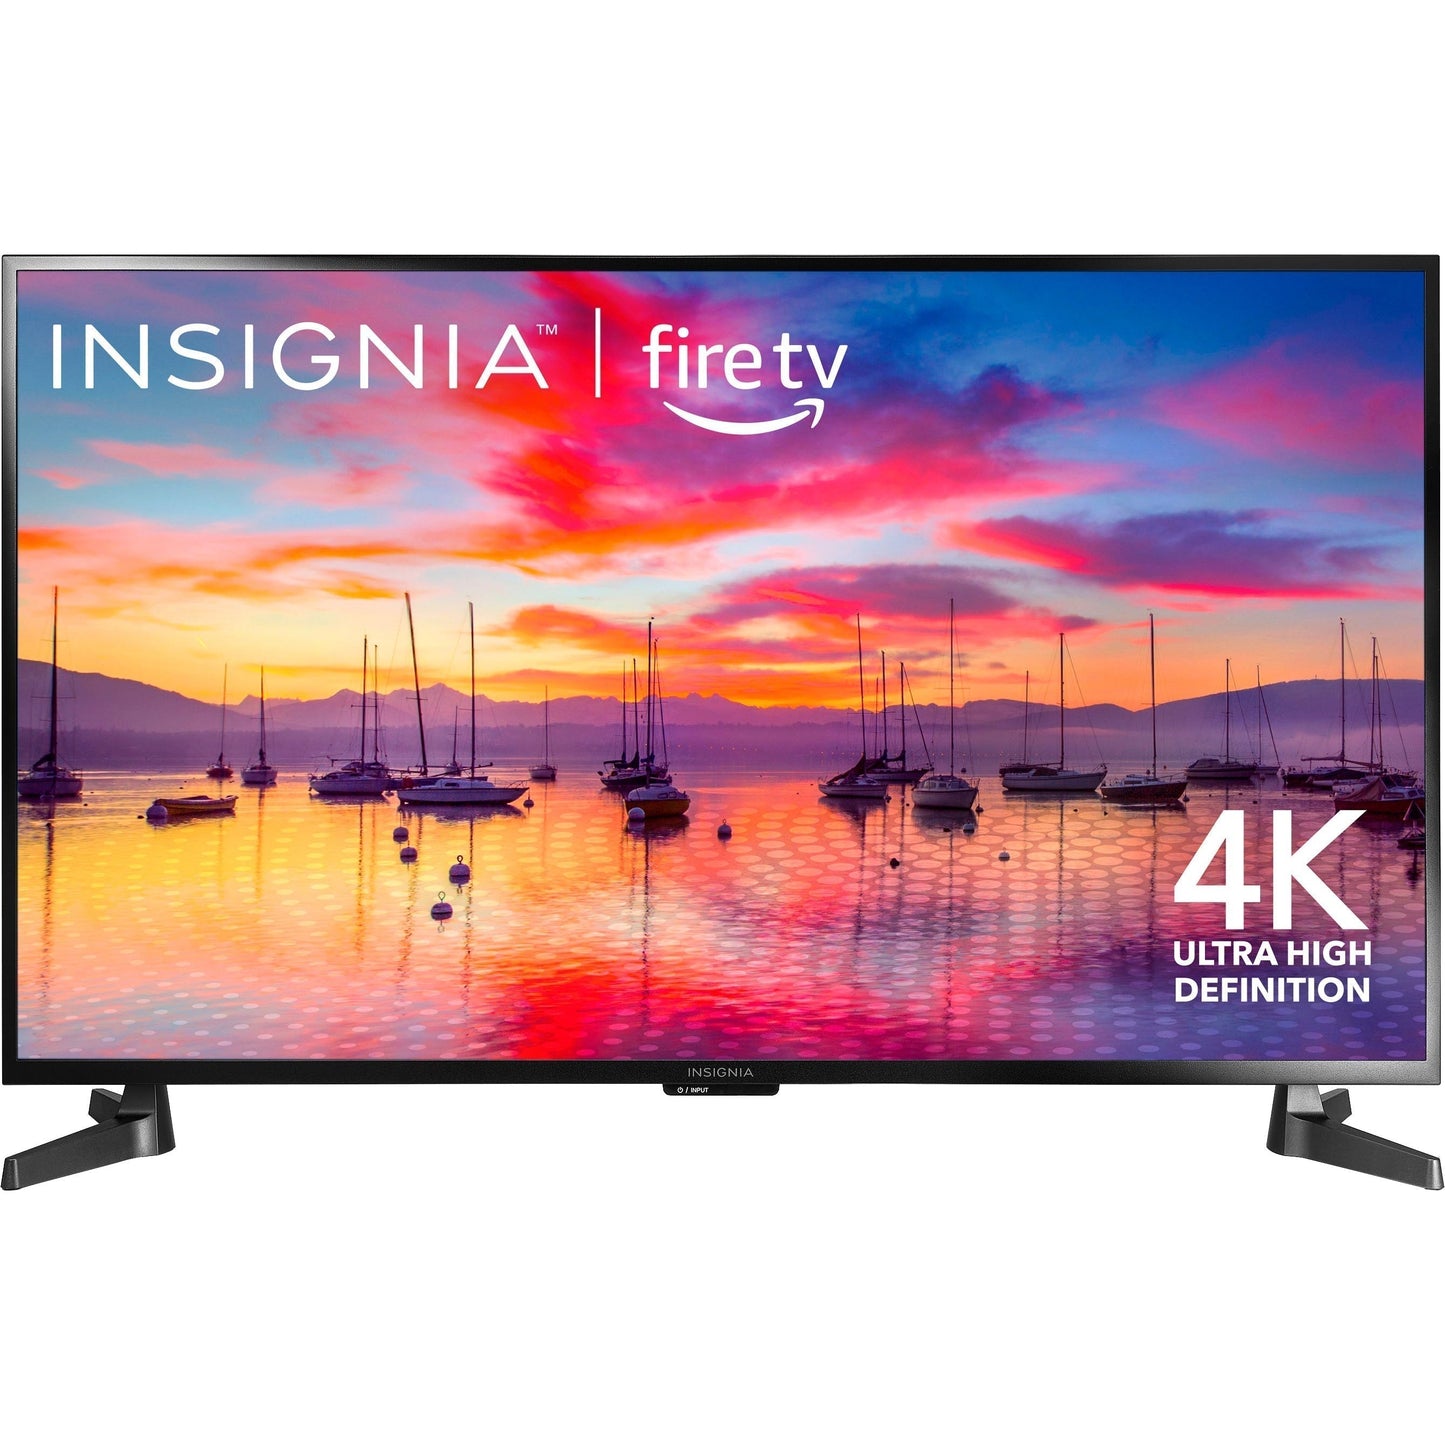 Insignia 43" LED 4K UHD Smart Fire TV